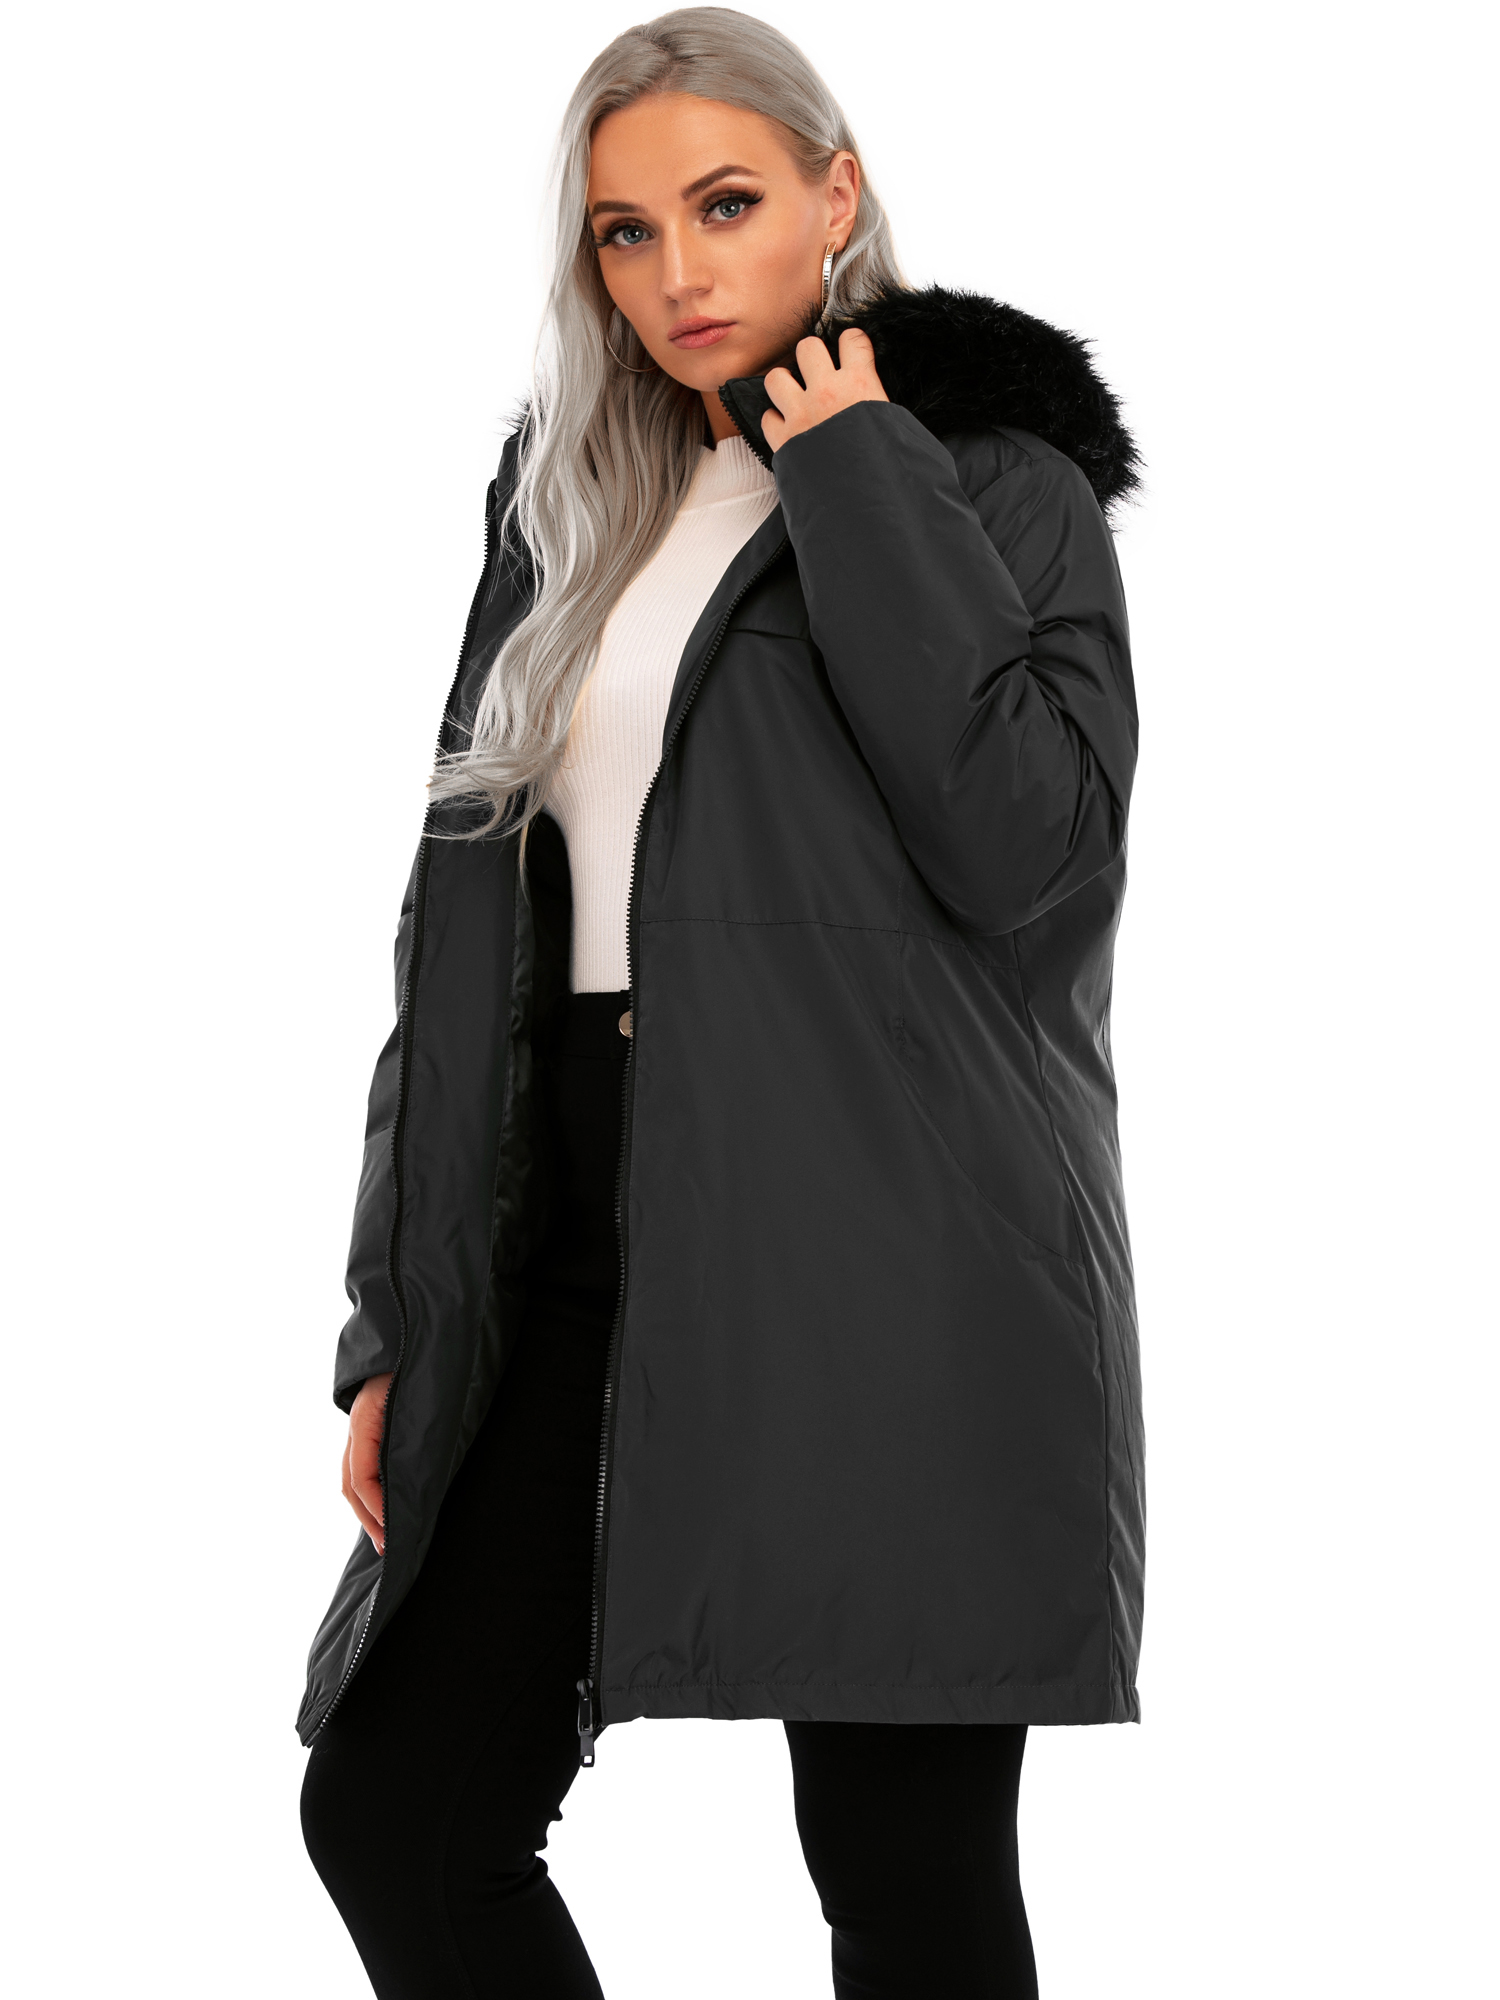 LELINTA Winter Plus Size Long Hoodie Coat Warm Jacket for Women, Zipper Parka Overcoats Raincoat Active Outdoor Trench Coat - image 4 of 7